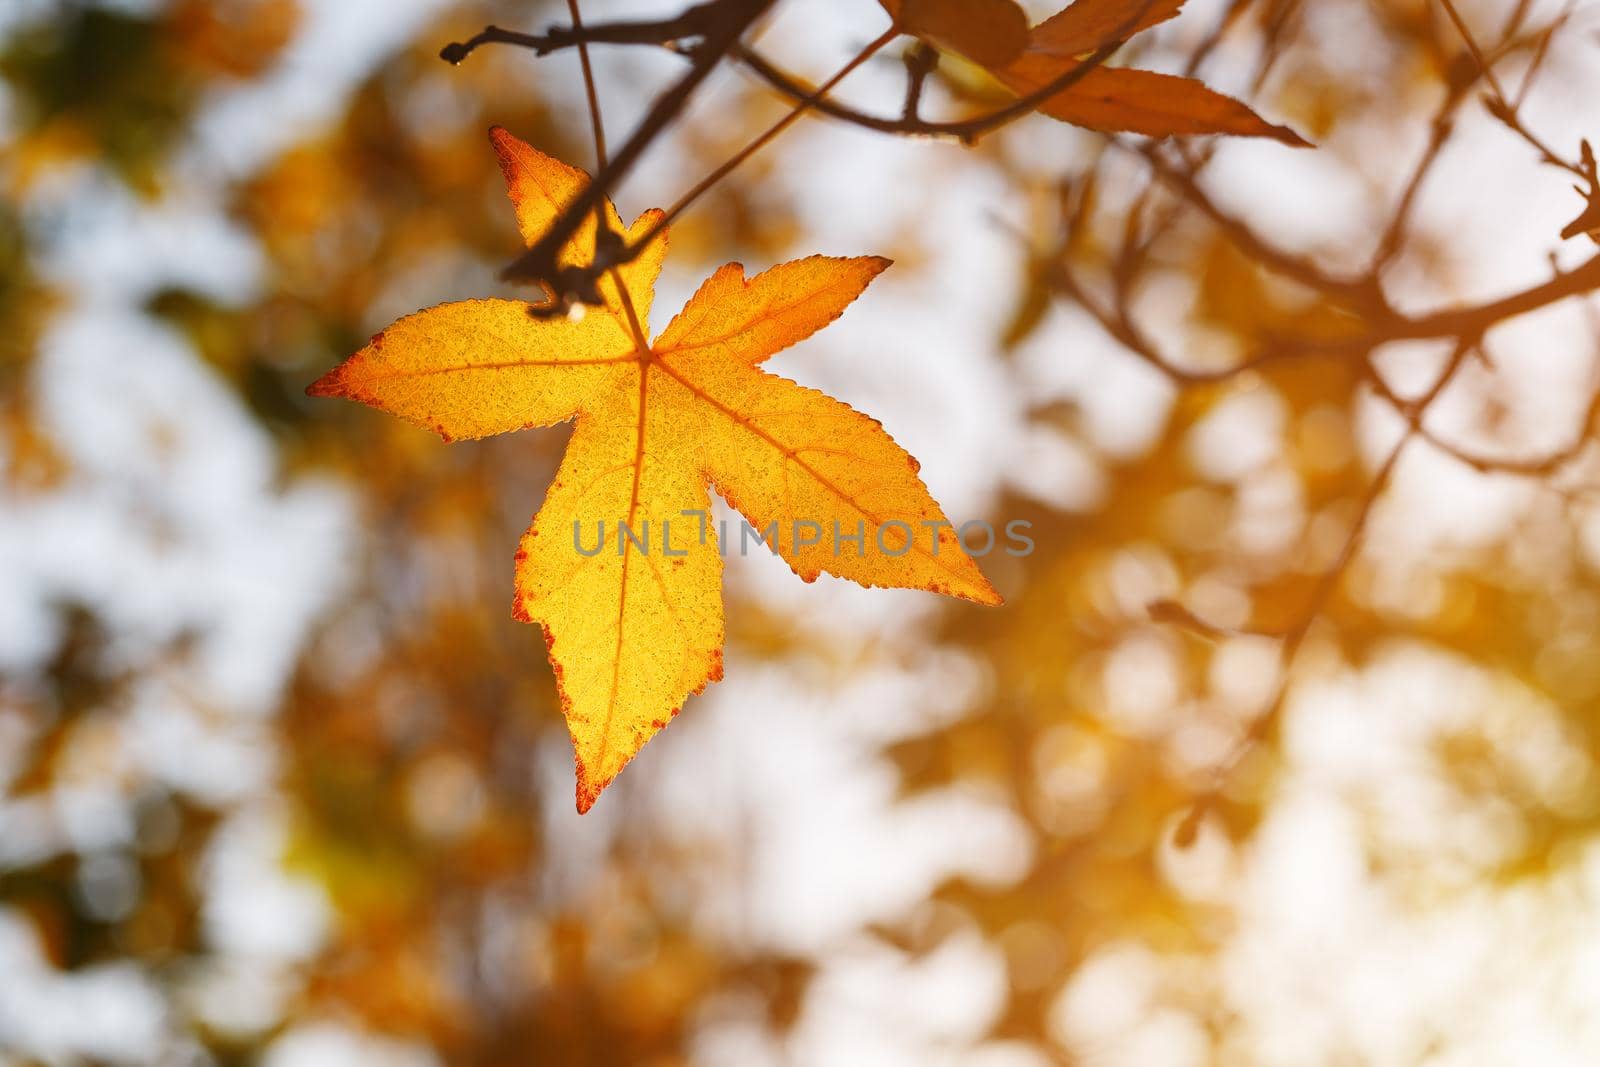 Autumn leaf, old orange maple leaves, dry foliage of trees, soft focus, autumn season, nature change, bright soft sunlight Abstract autumn background.